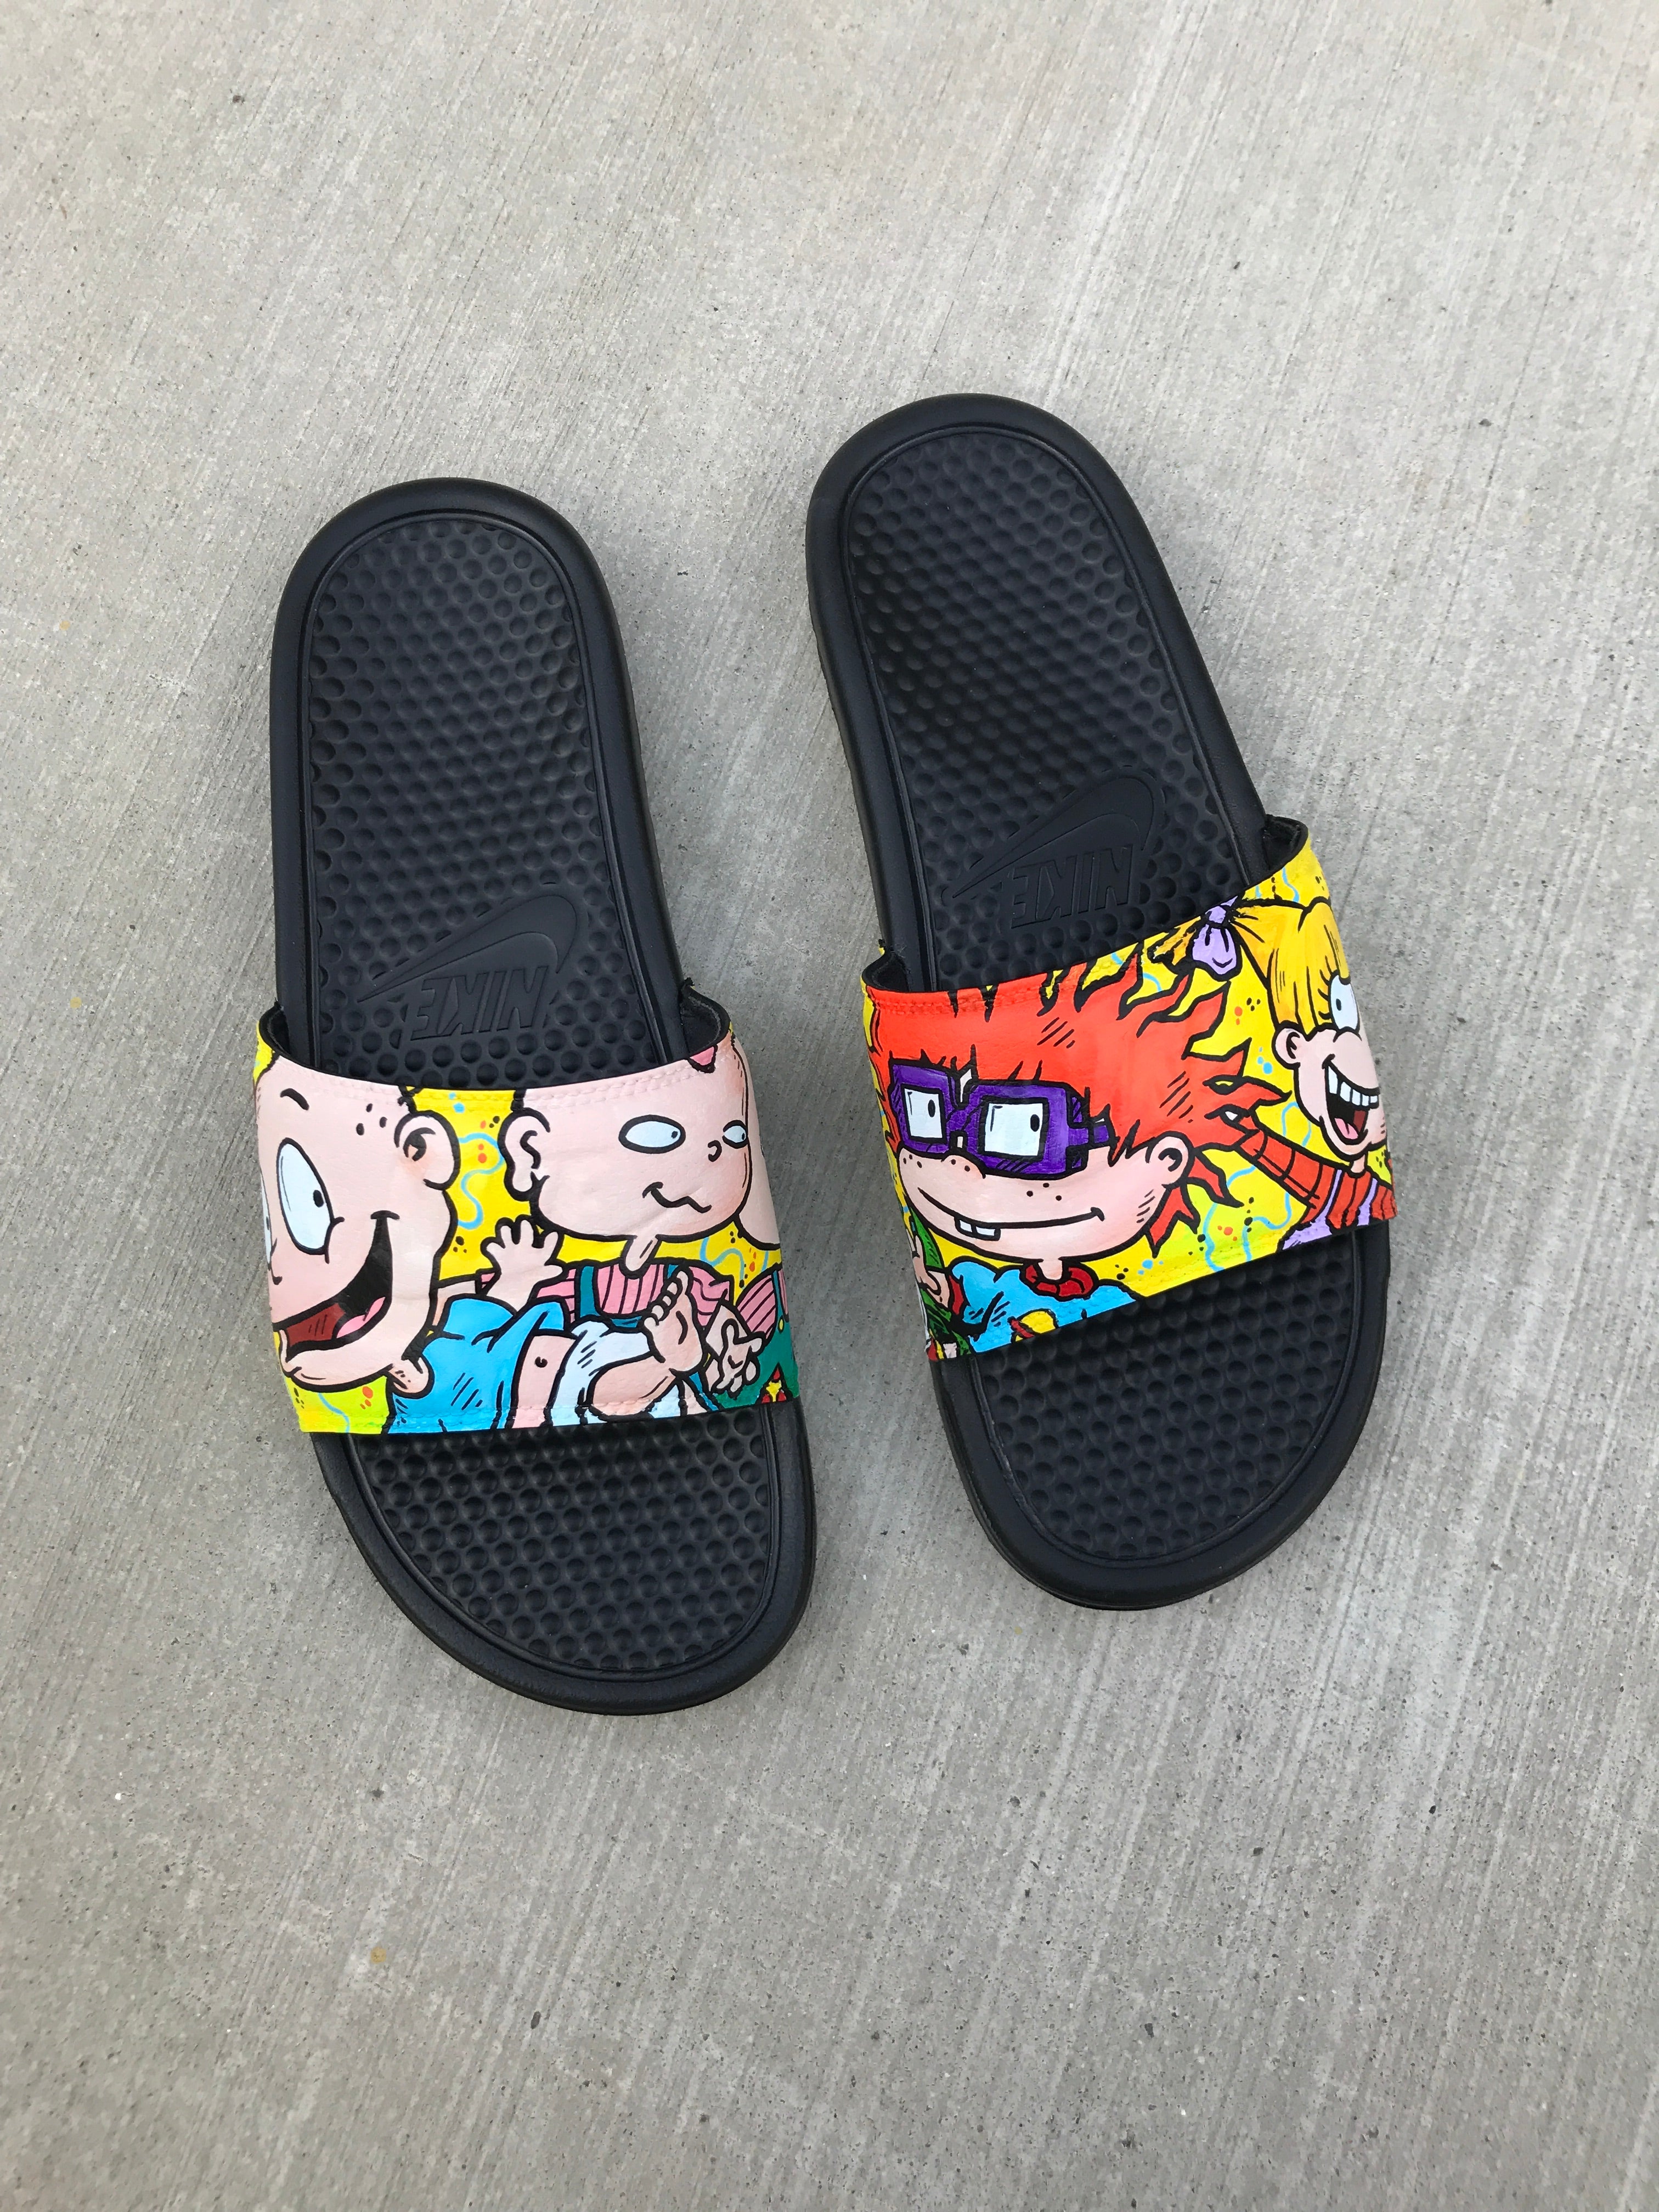 Rugrats Themed Hand Painted Nike Slides aka Sandals, Flip Flops